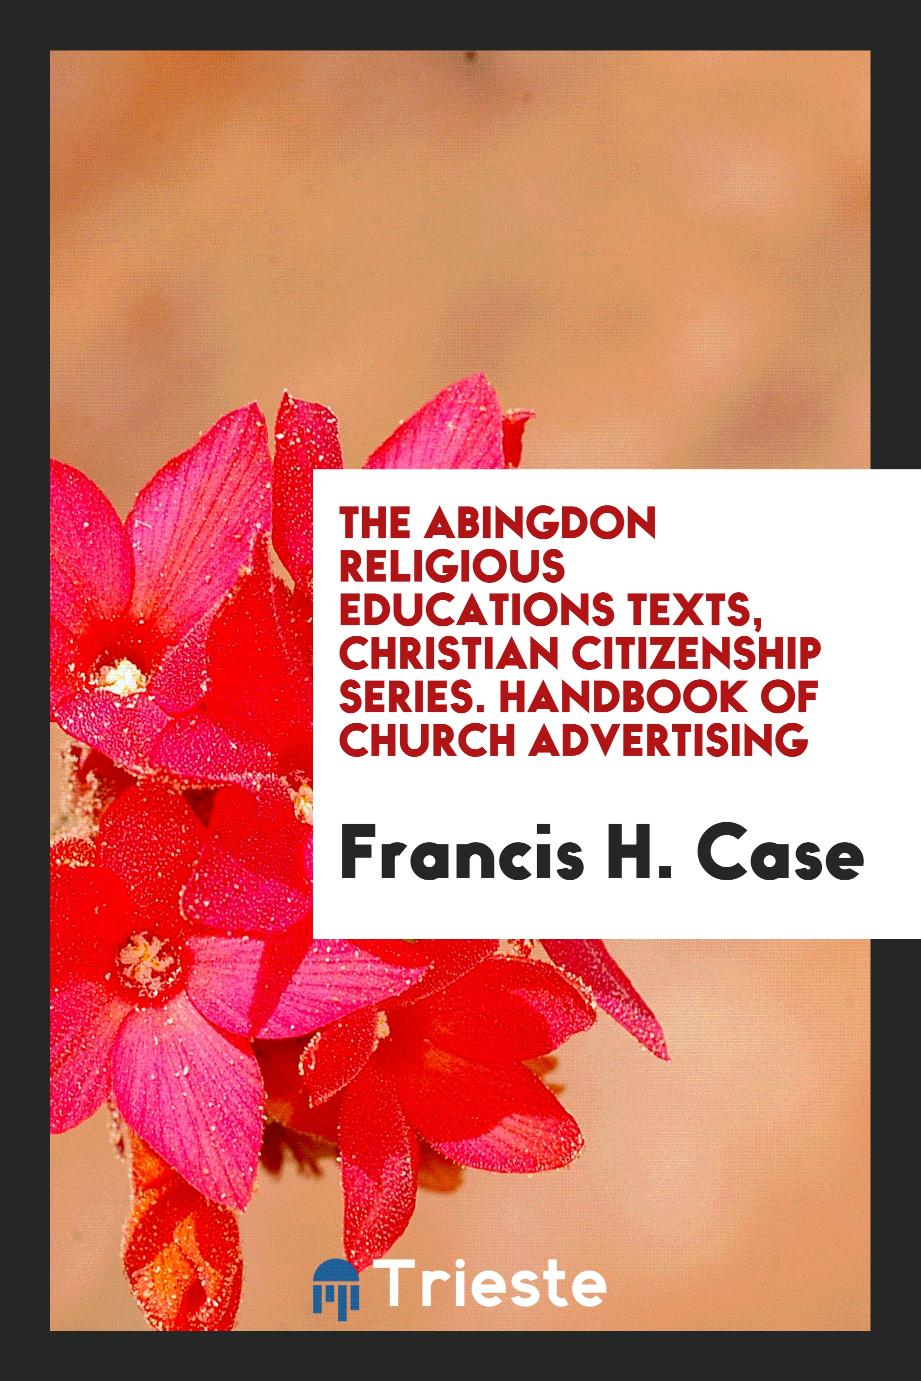 The Abingdon religious educations texts, Christian citizenship series. Handbook of church advertising